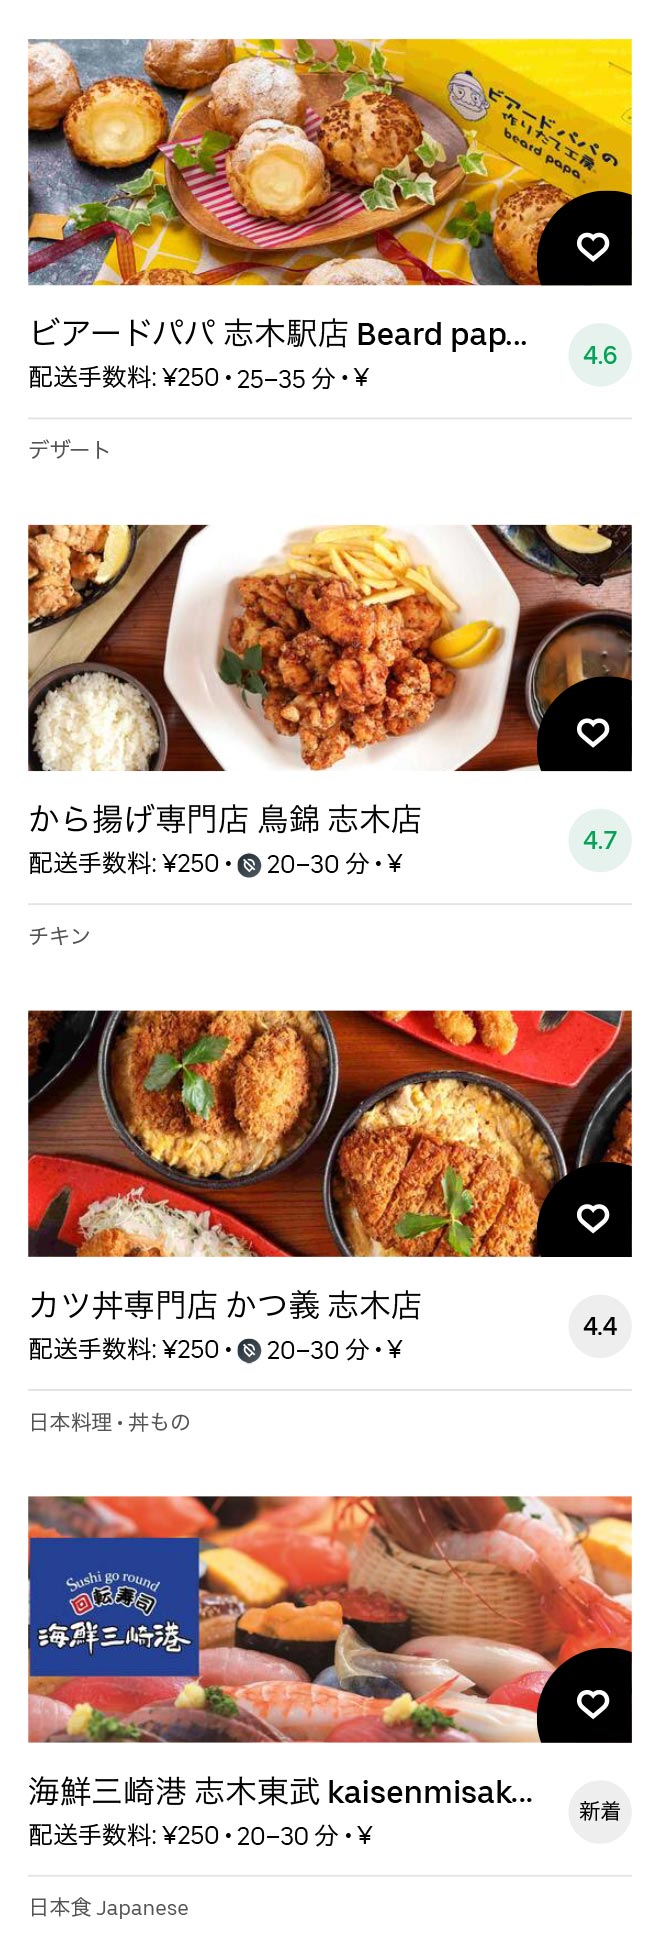 Yanasegawa menu 2011 10